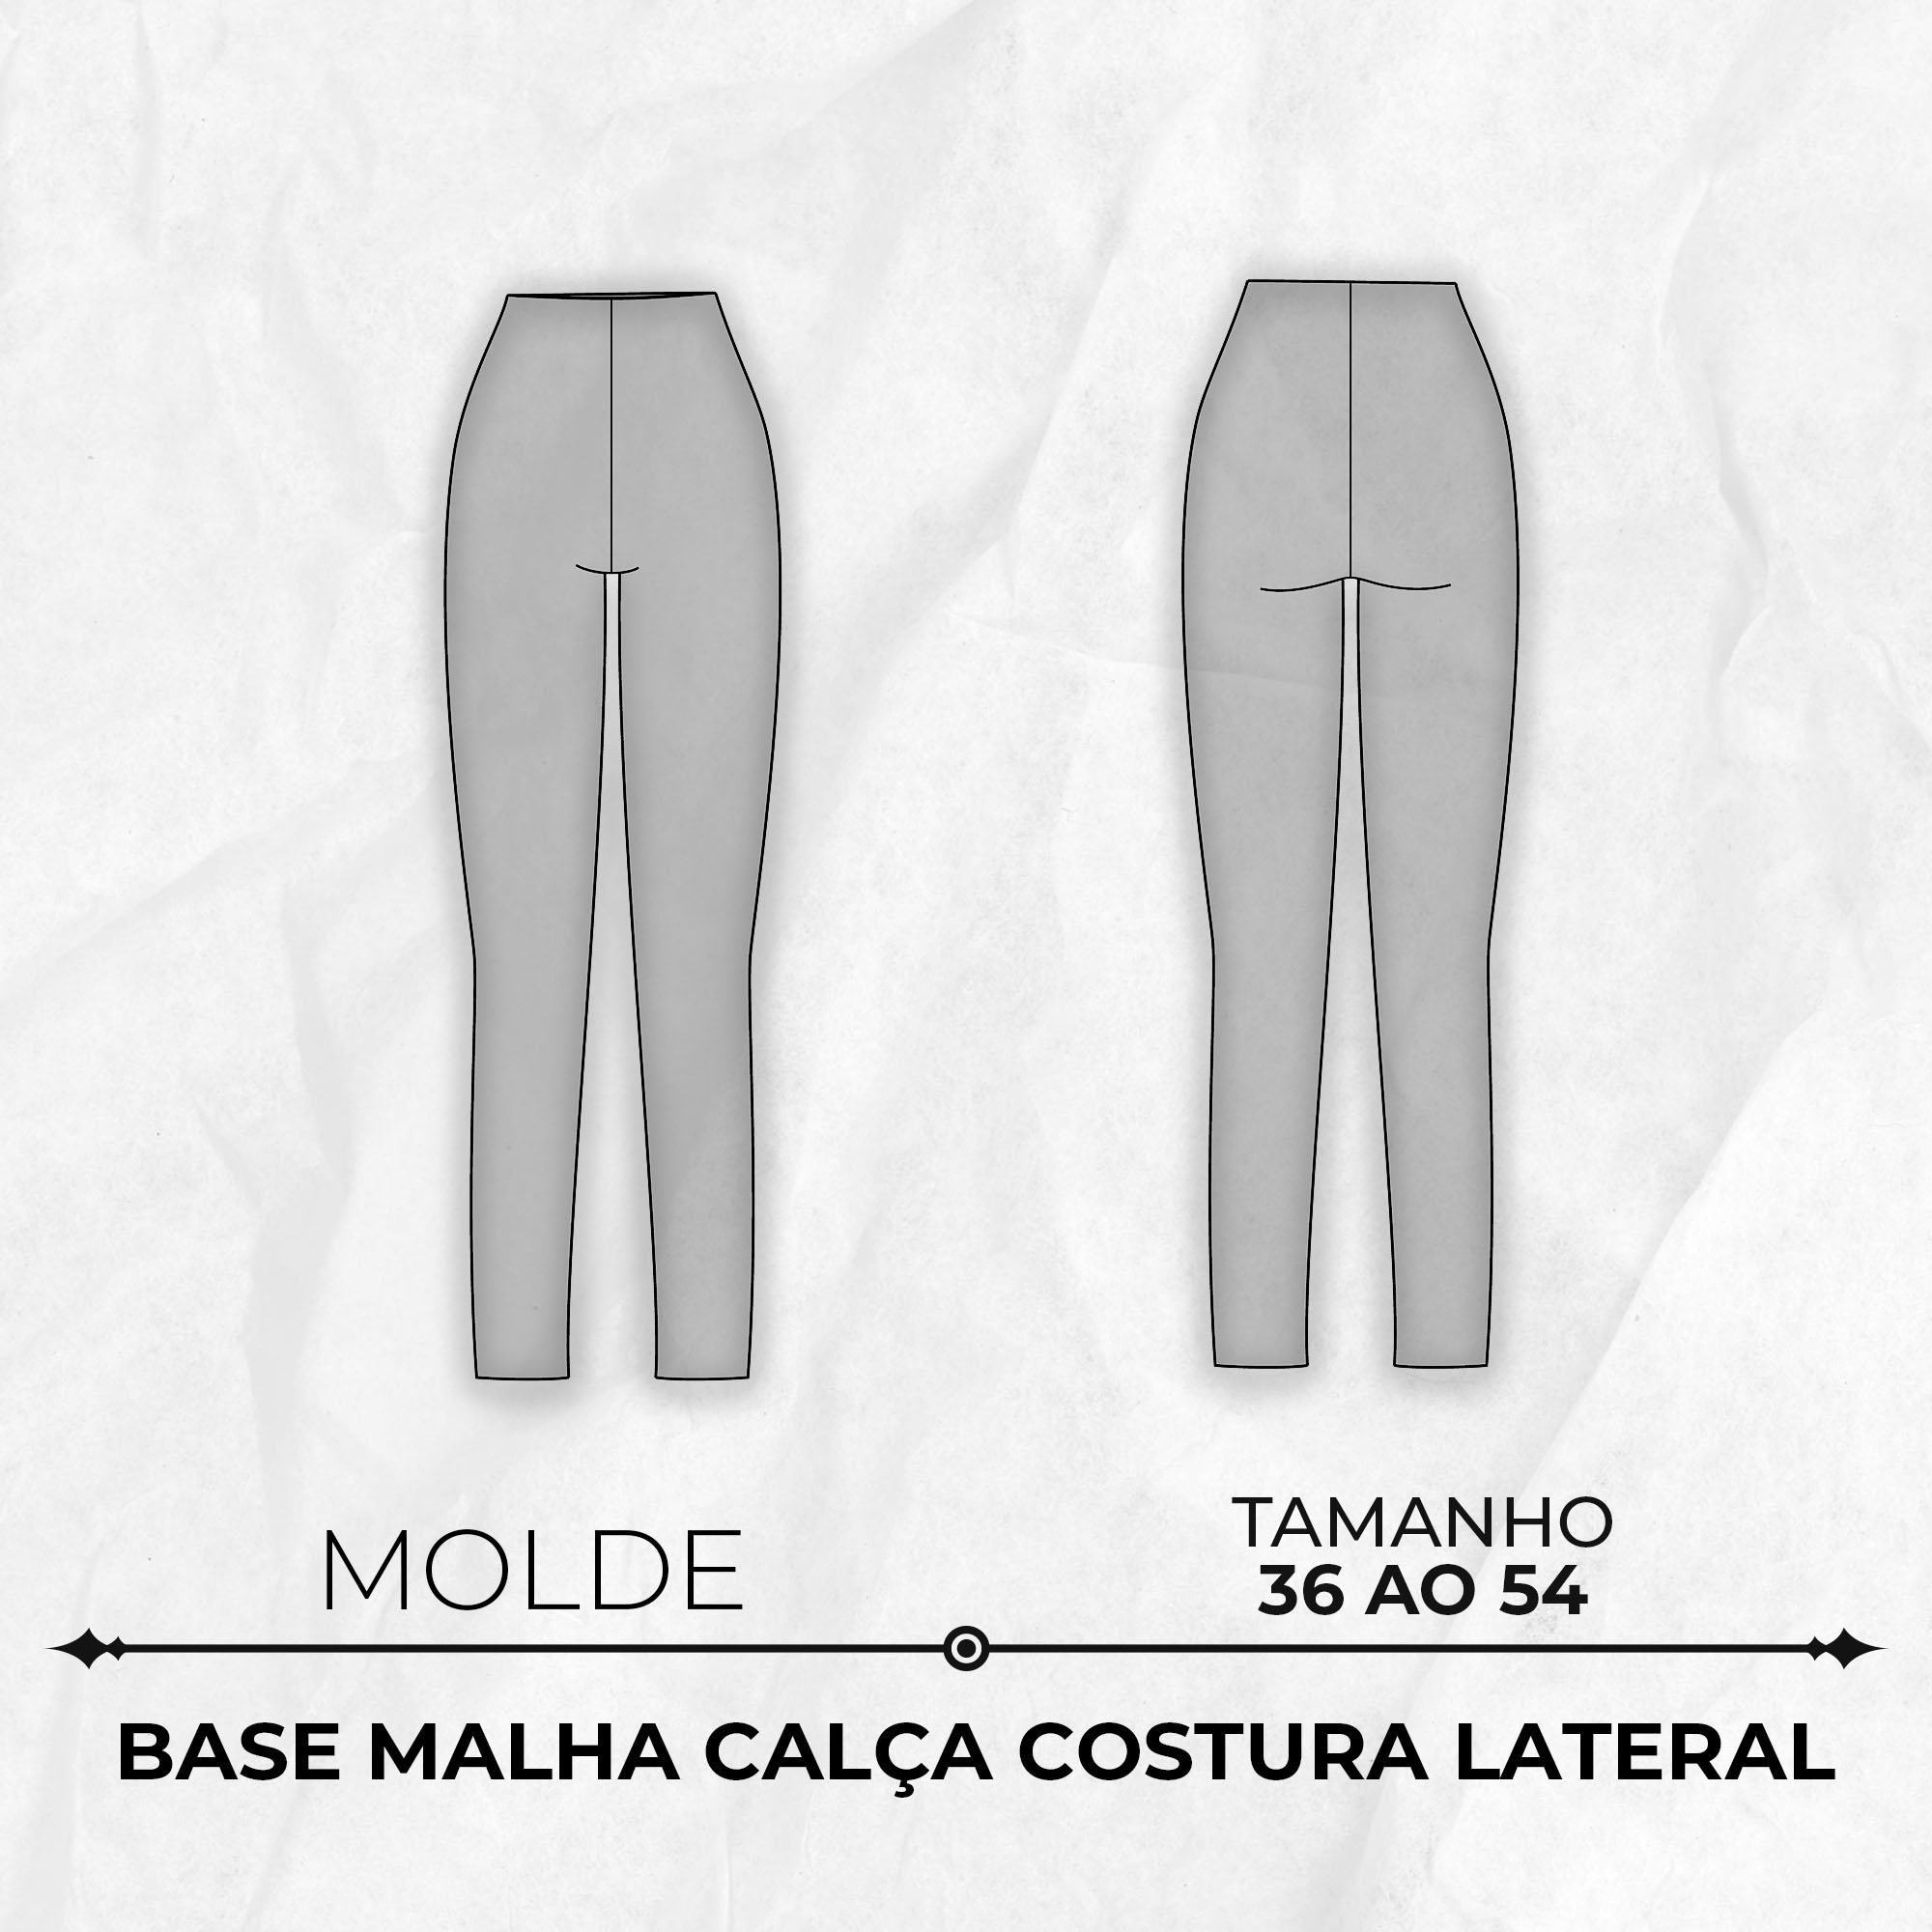 Molde base malha calça costura lateral tamanho 36 ao 54 by  Wania Machado